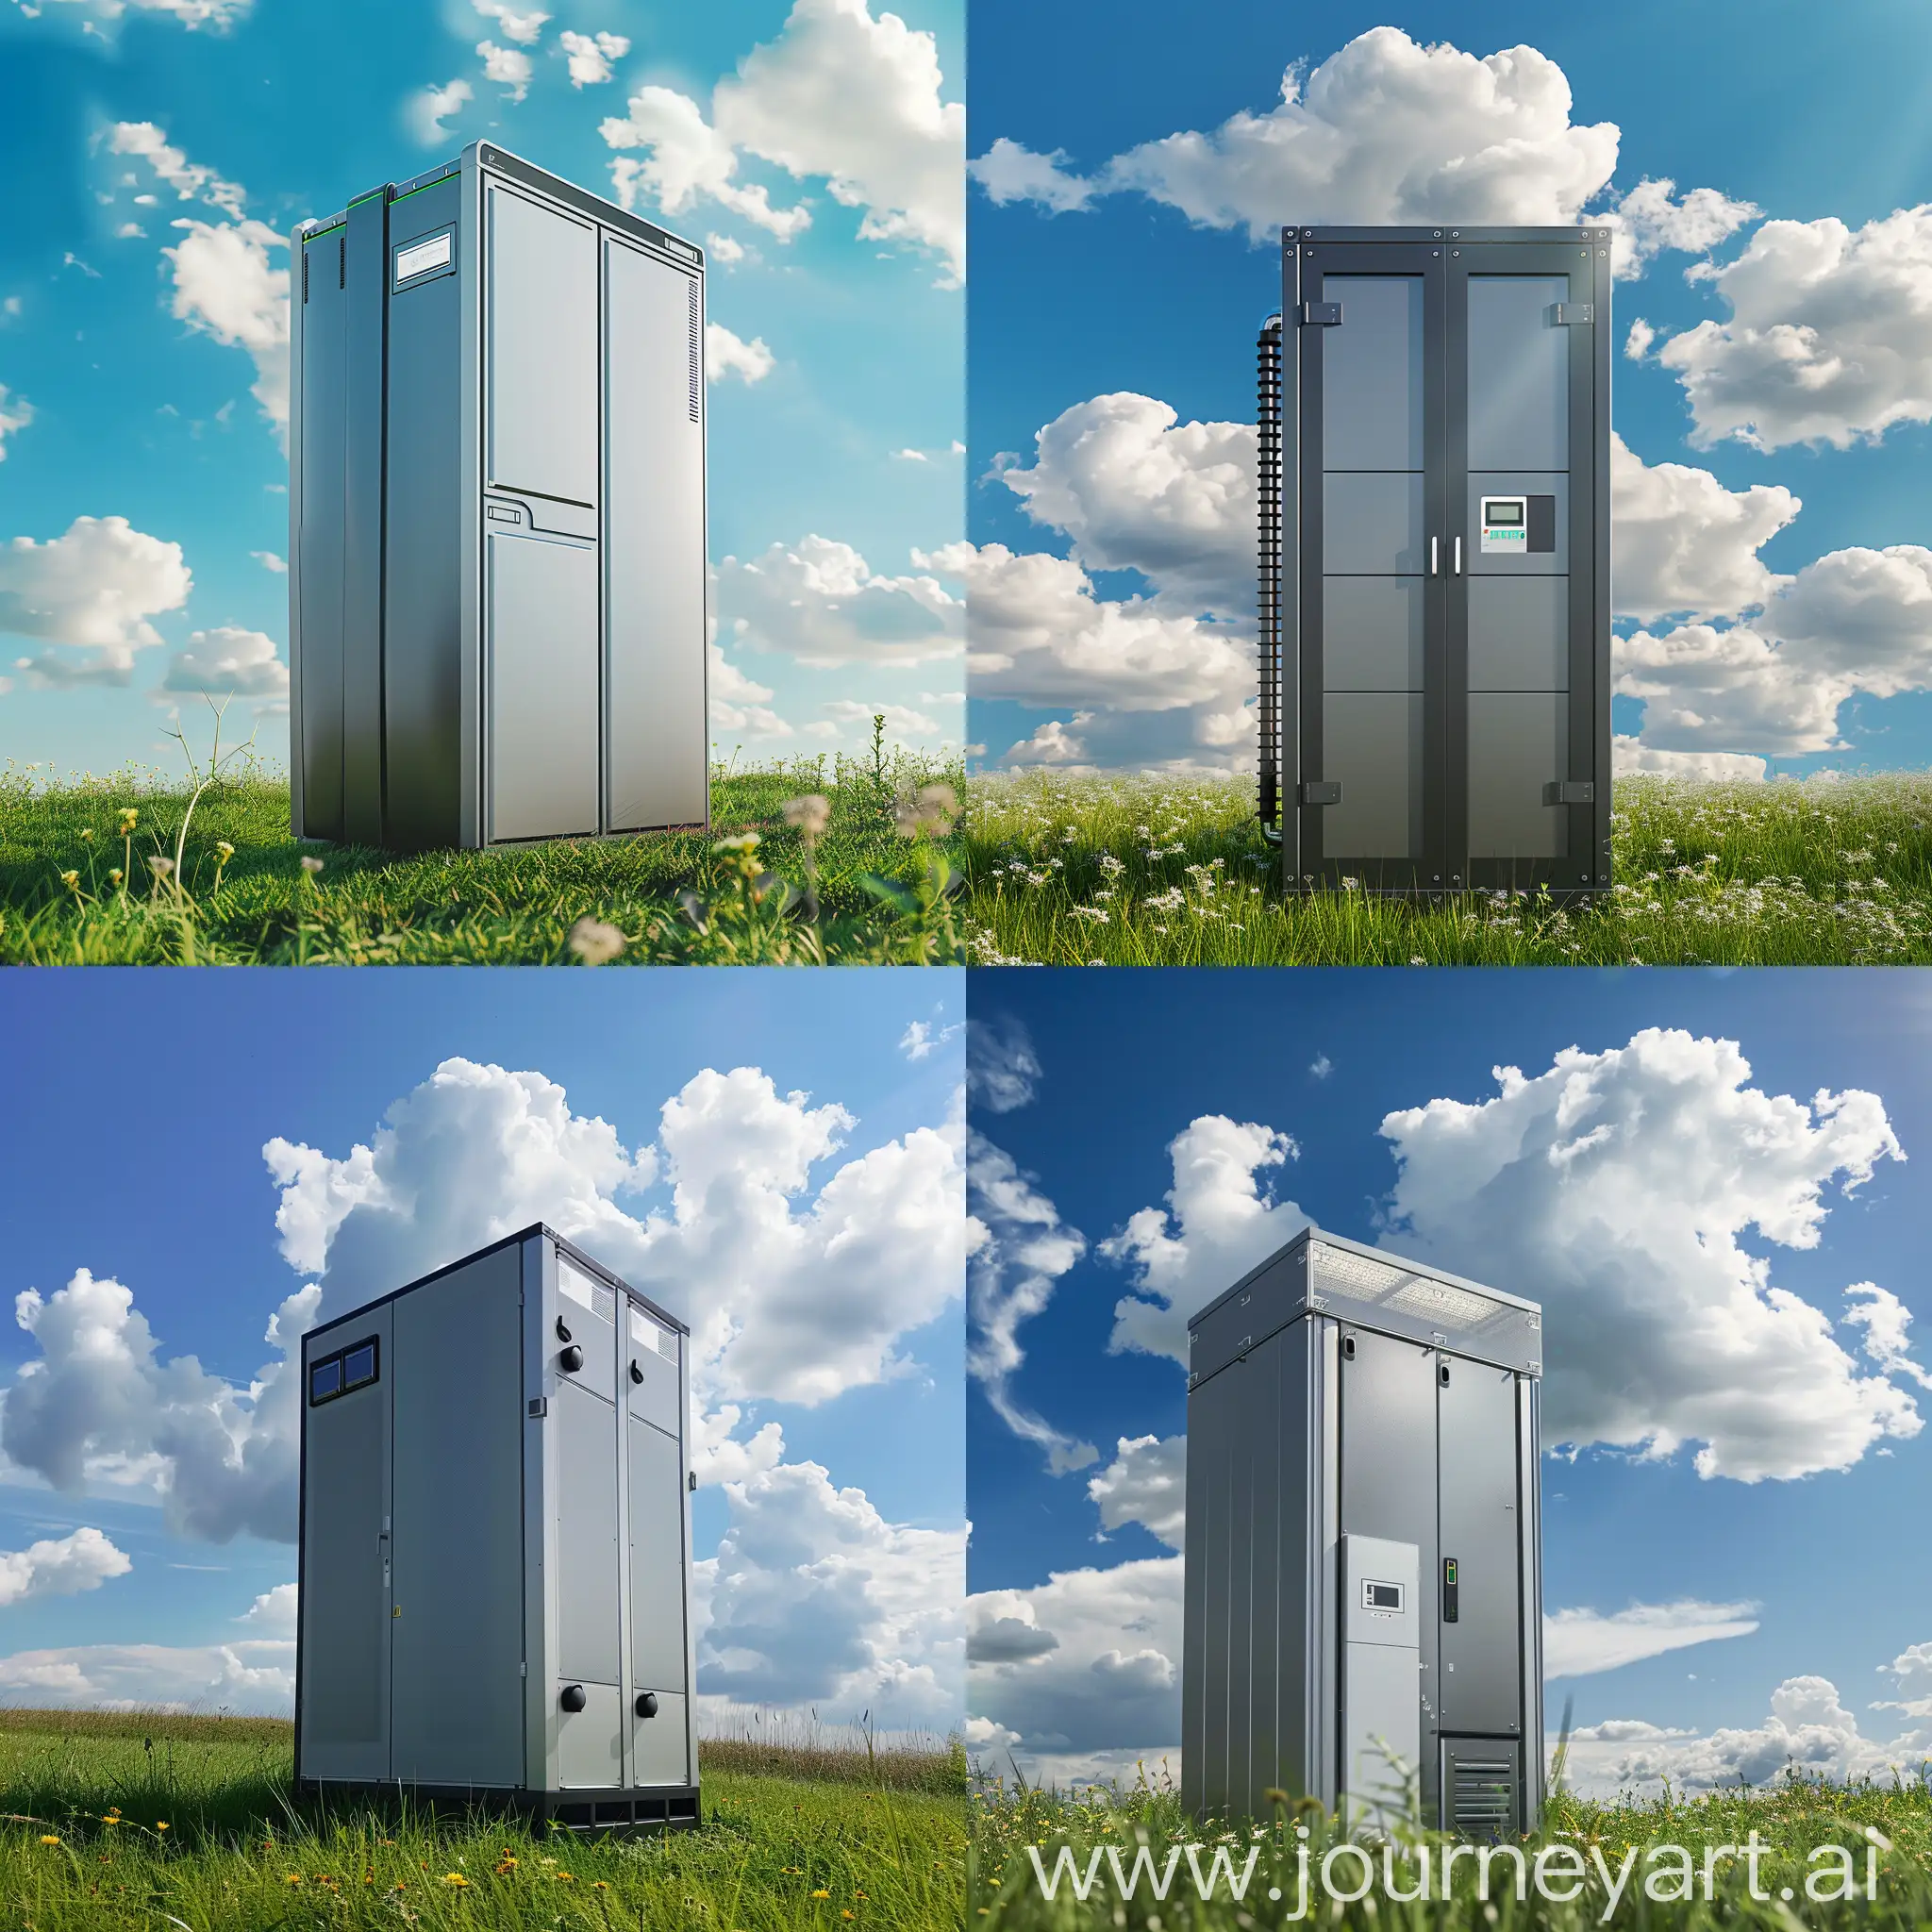 Futuristic-Energy-Storage-Cabinet-on-Grassy-Plains-Under-Blue-Sky